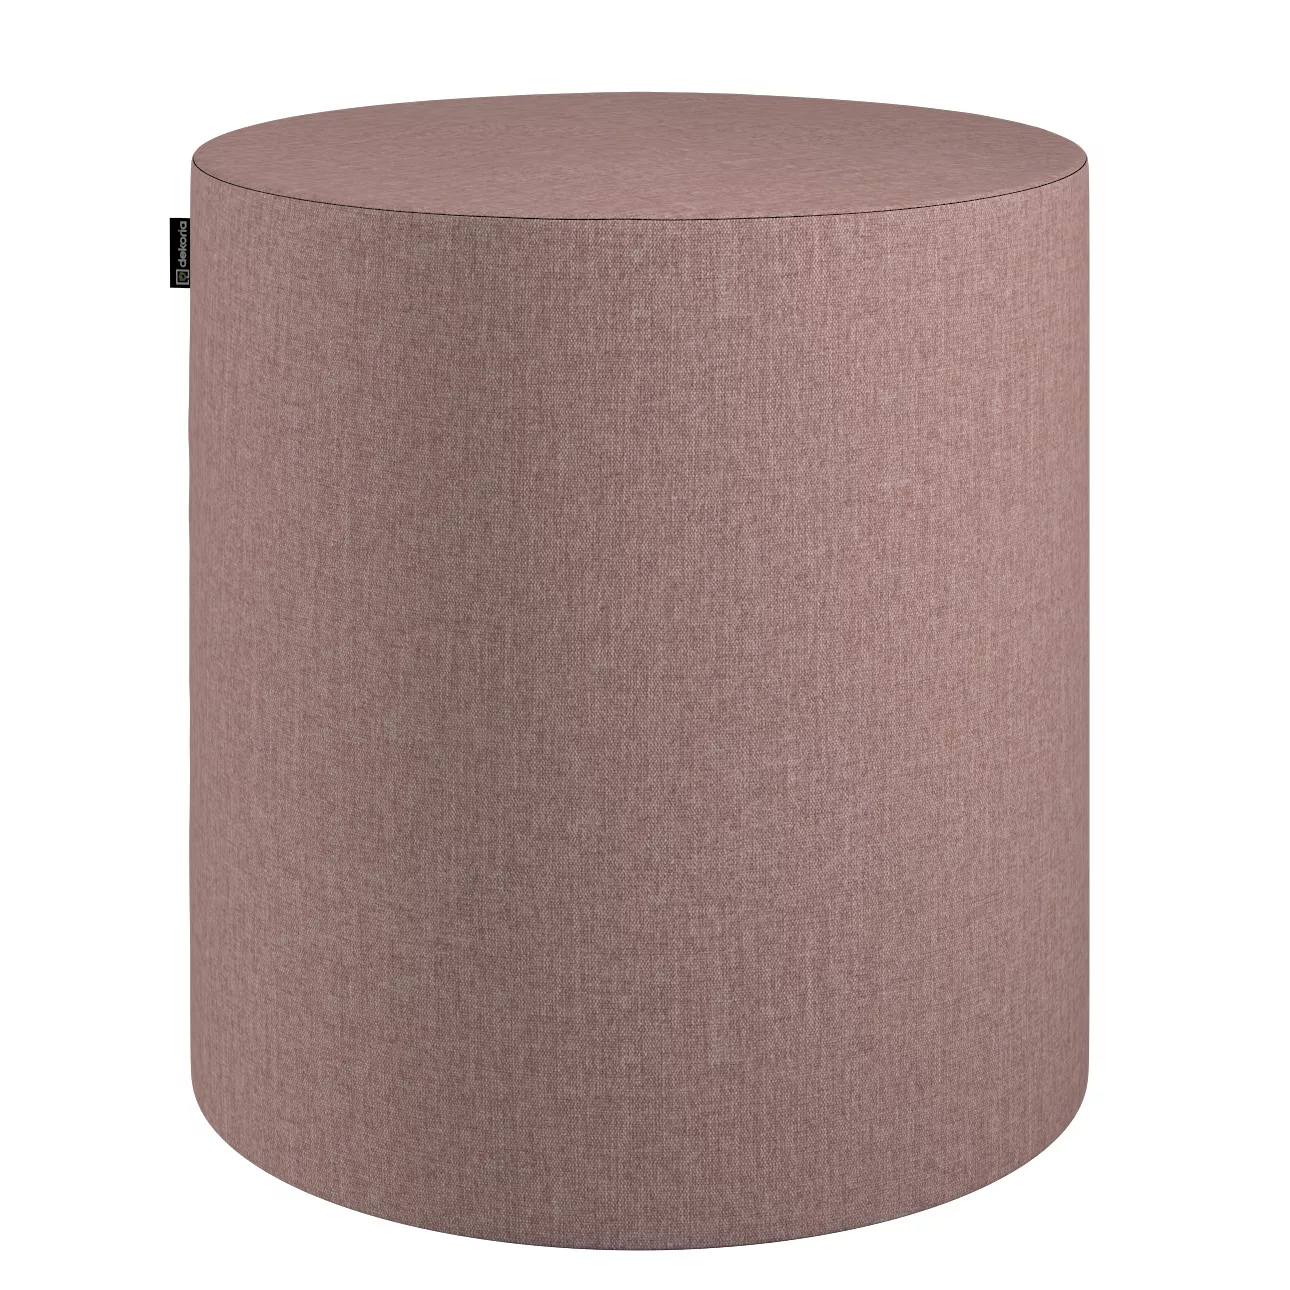 Pouf Barrel, altrosa, ø40 cm x 40 cm, City (704-83) günstig online kaufen